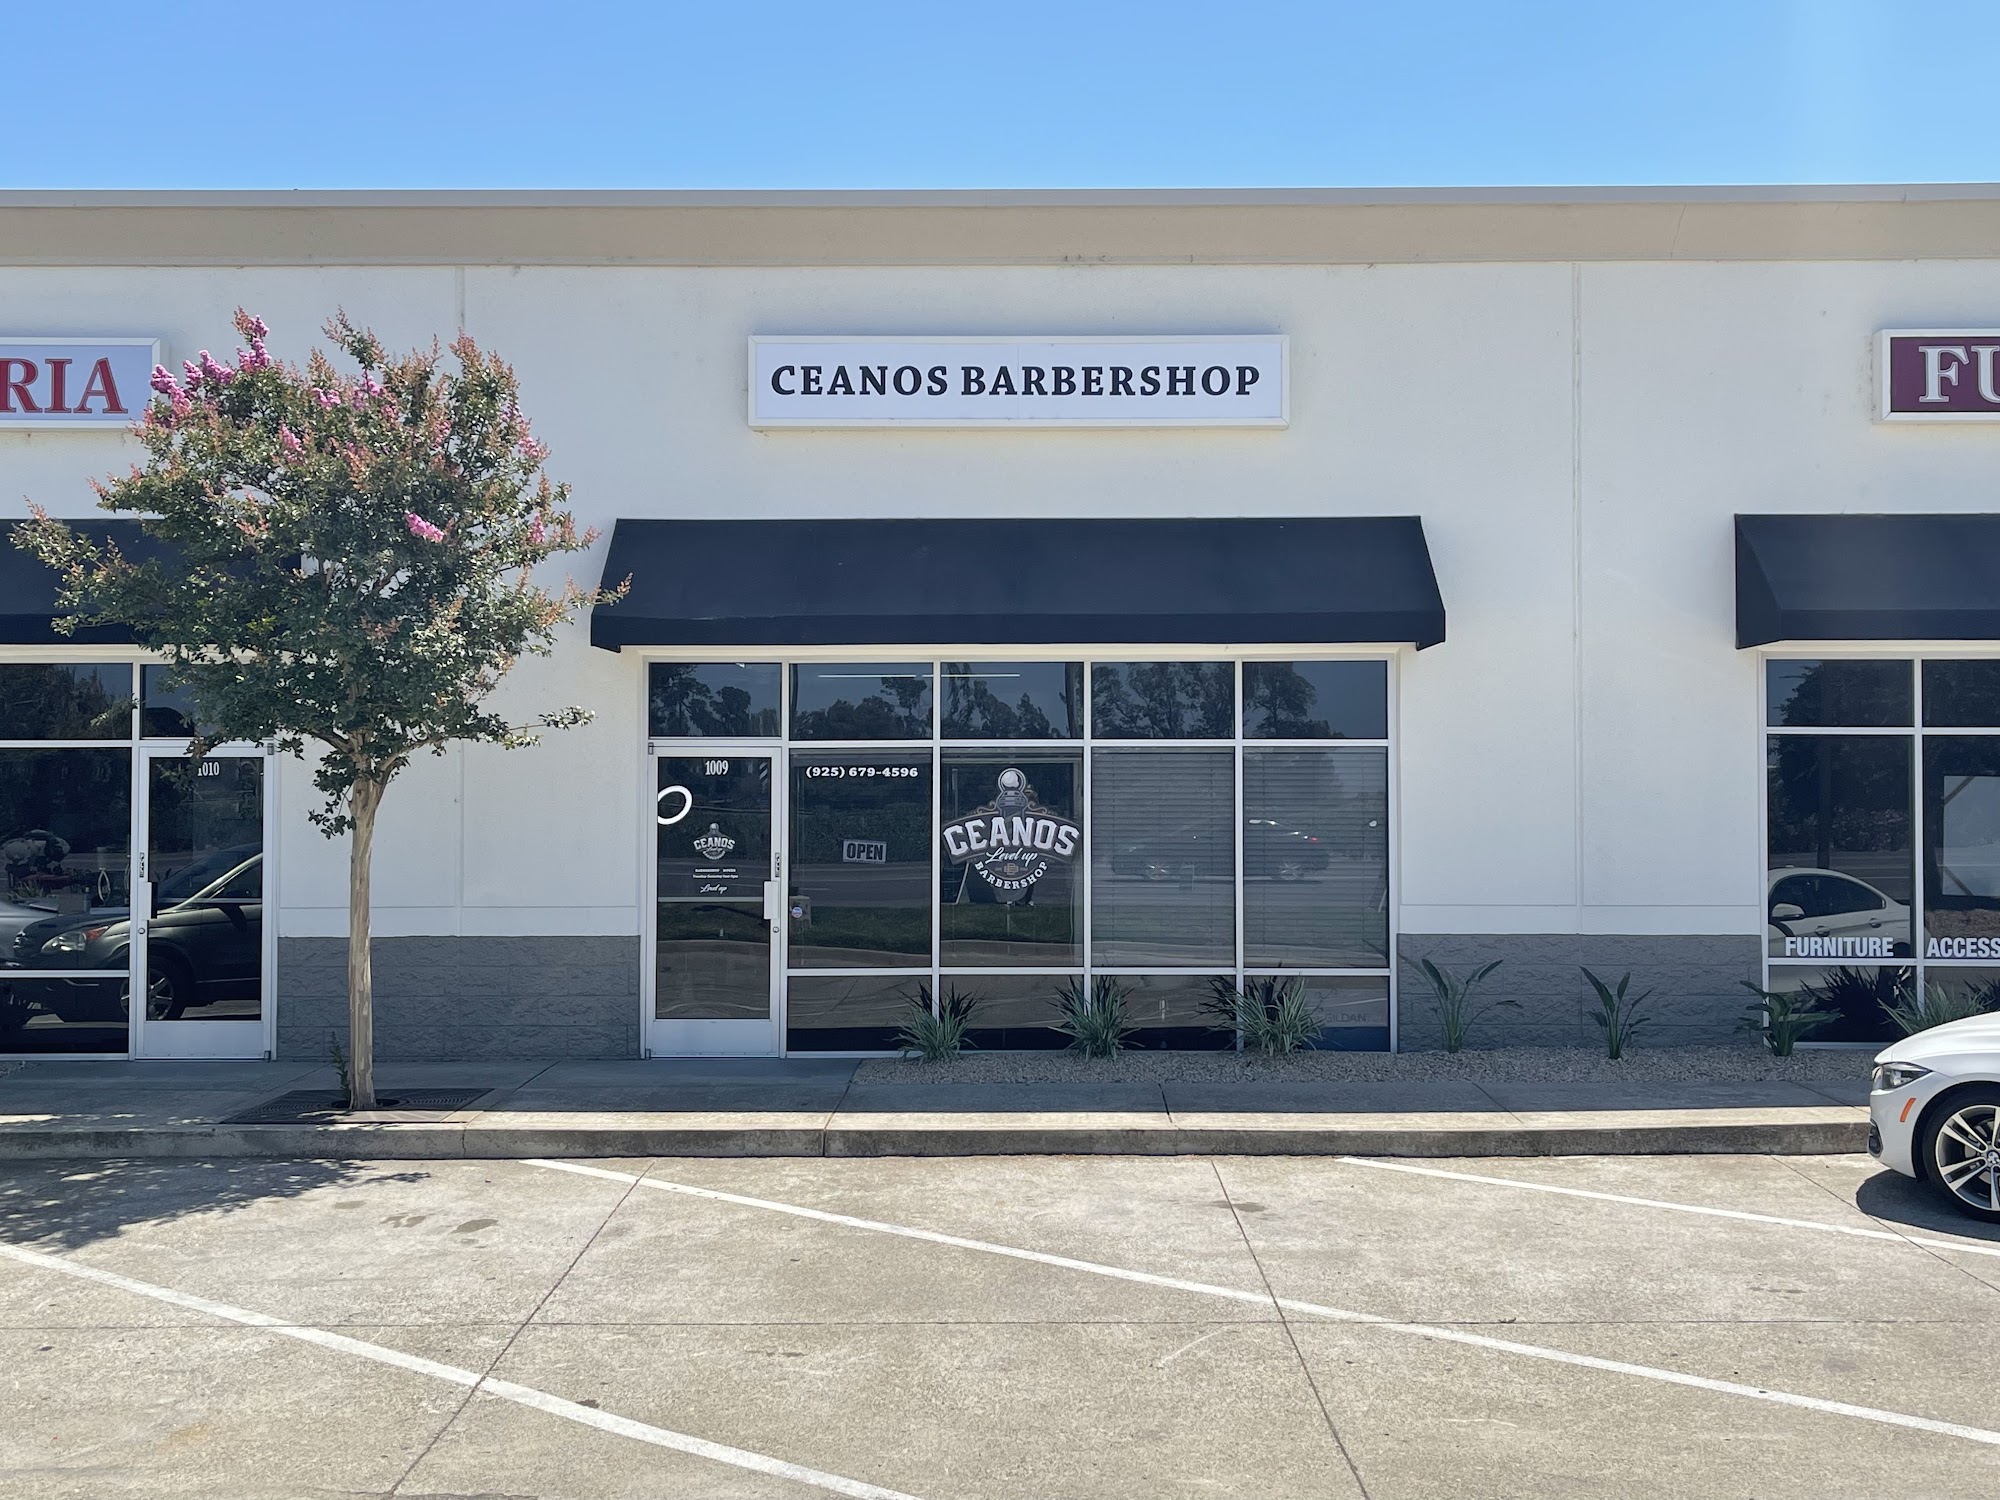 Ceanos Barbershop